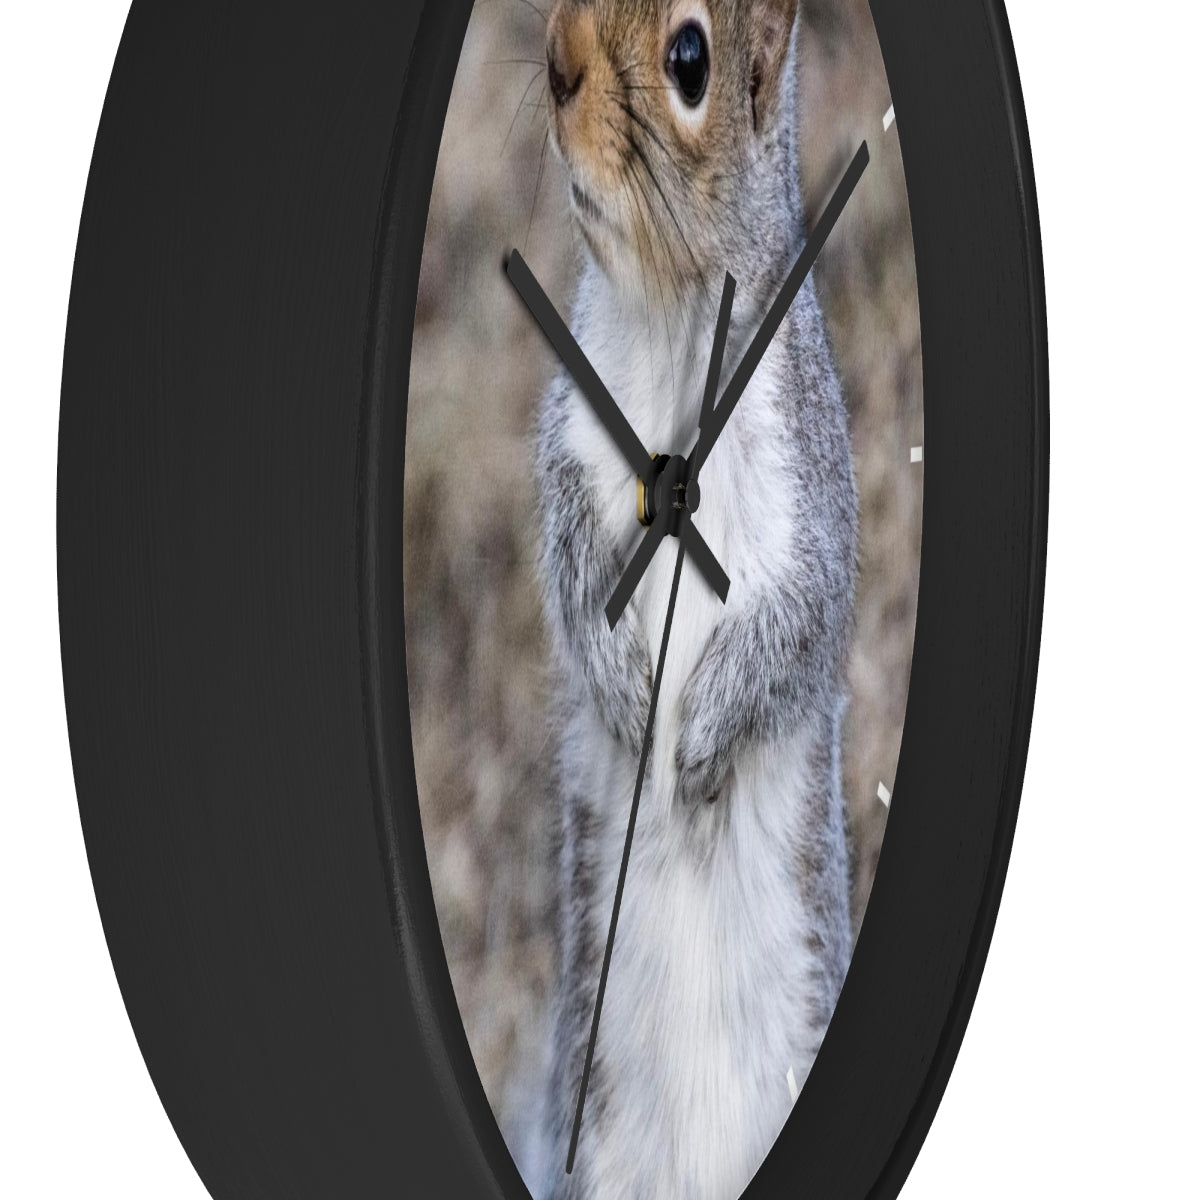 Squirrel Wall clock